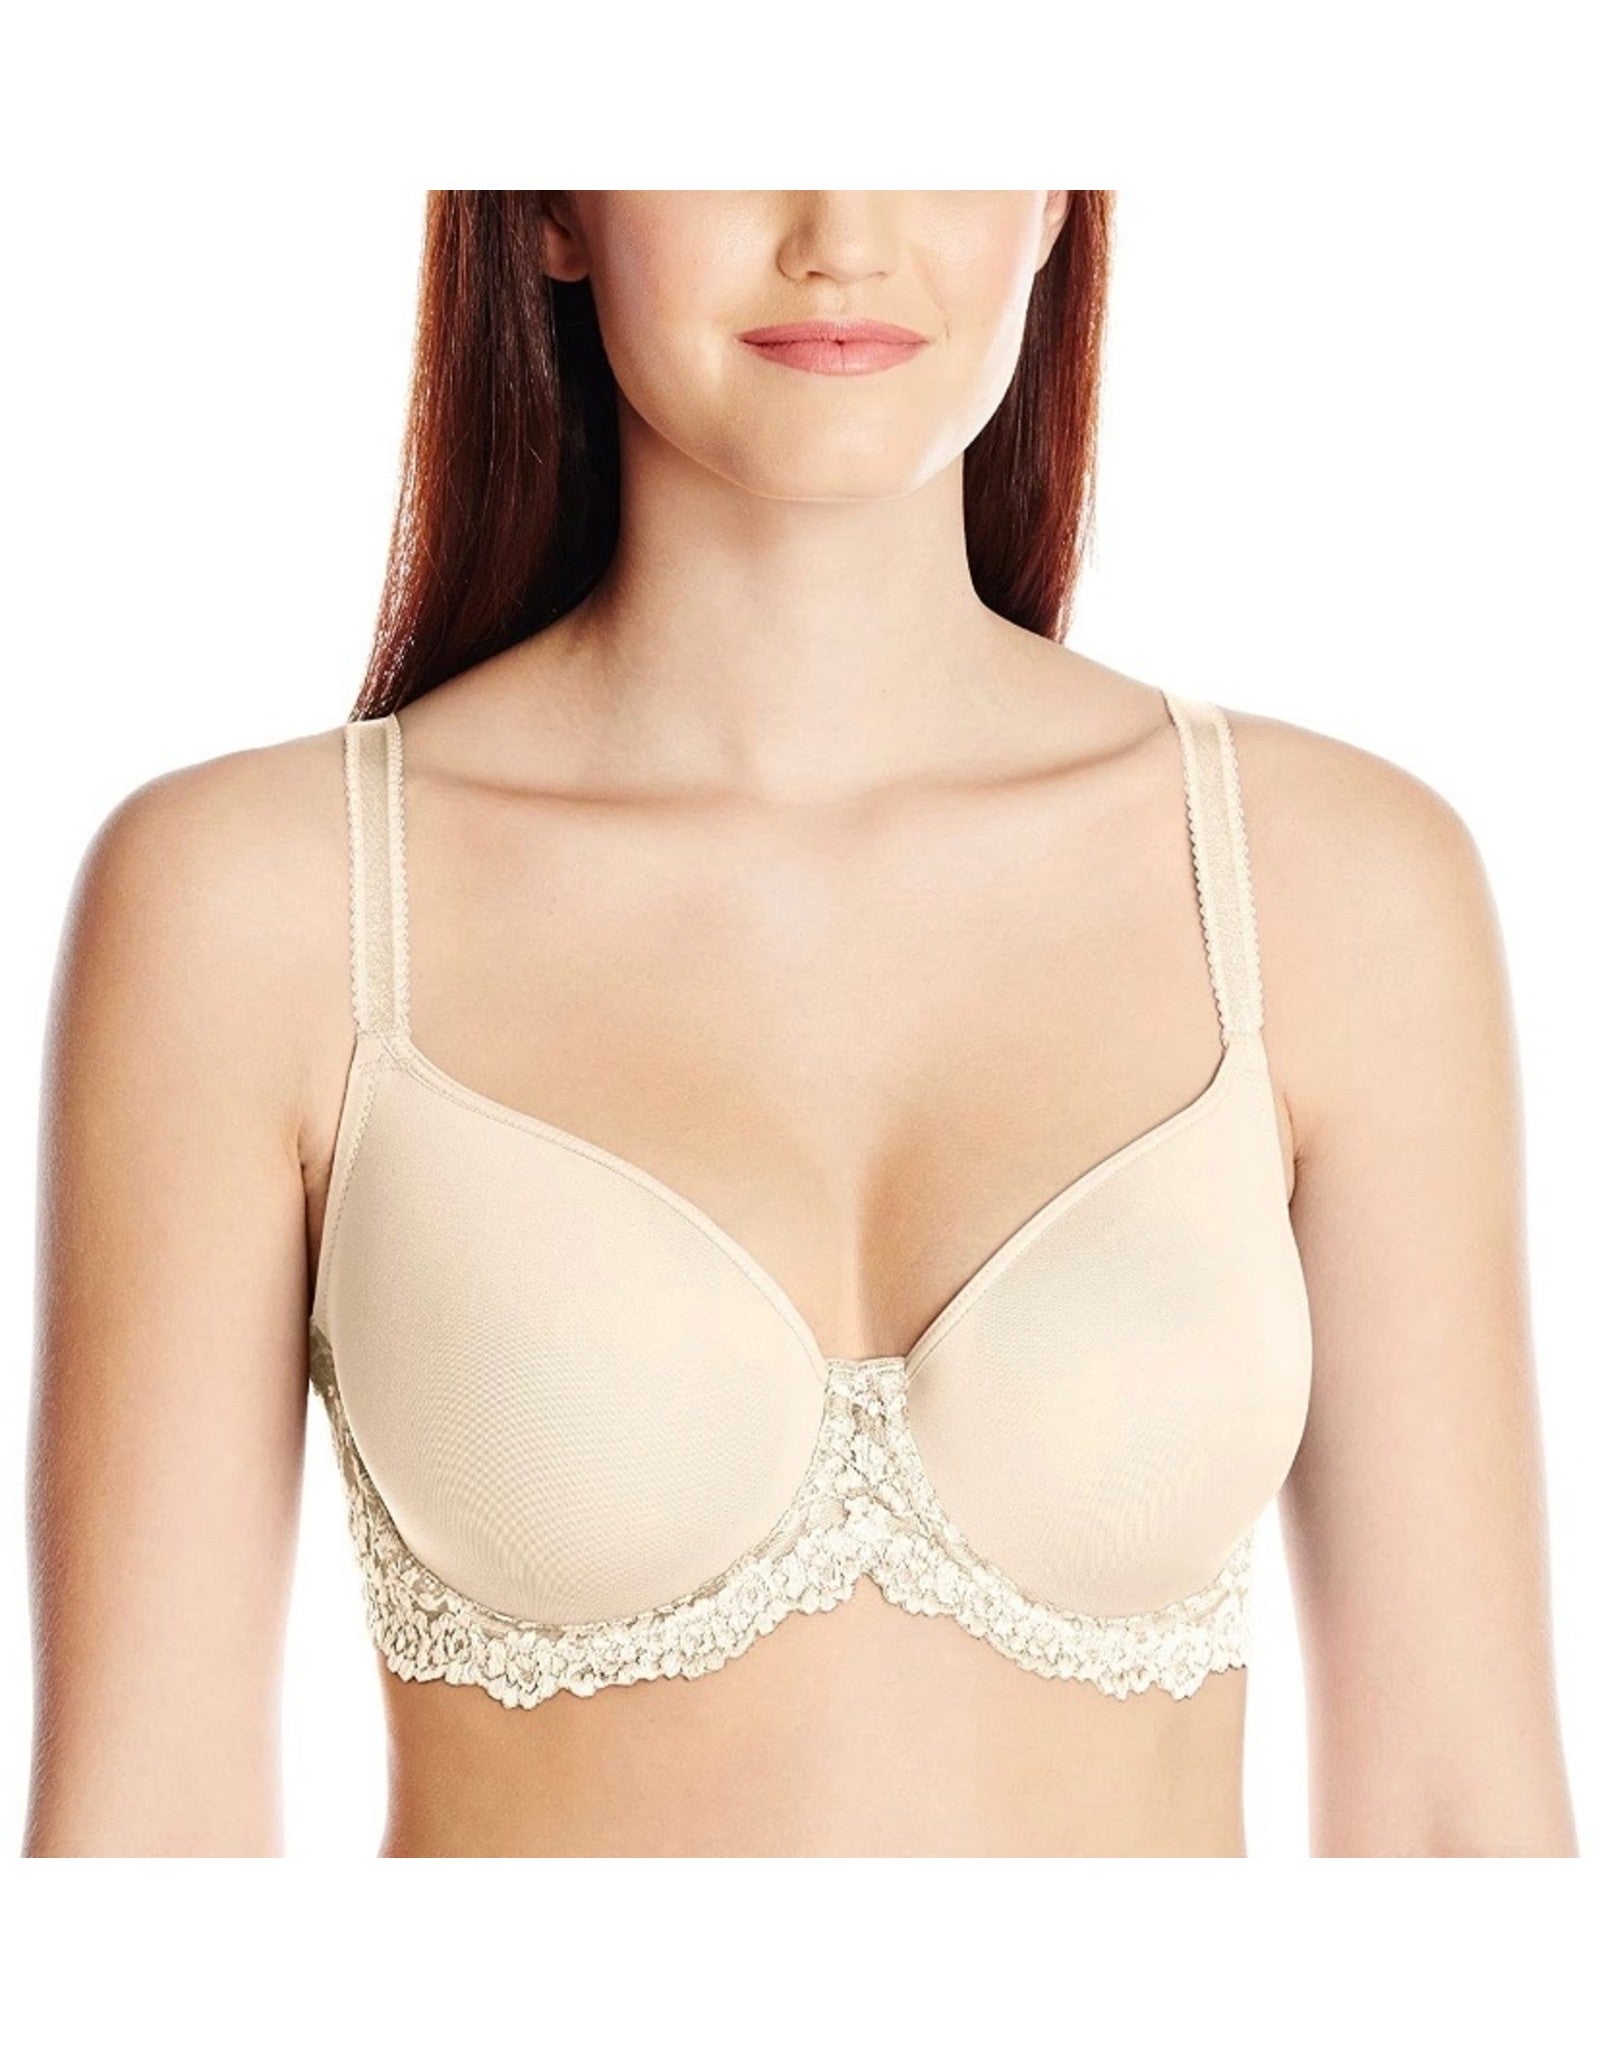 Wacoal Inspiration contour bra size 34DDD